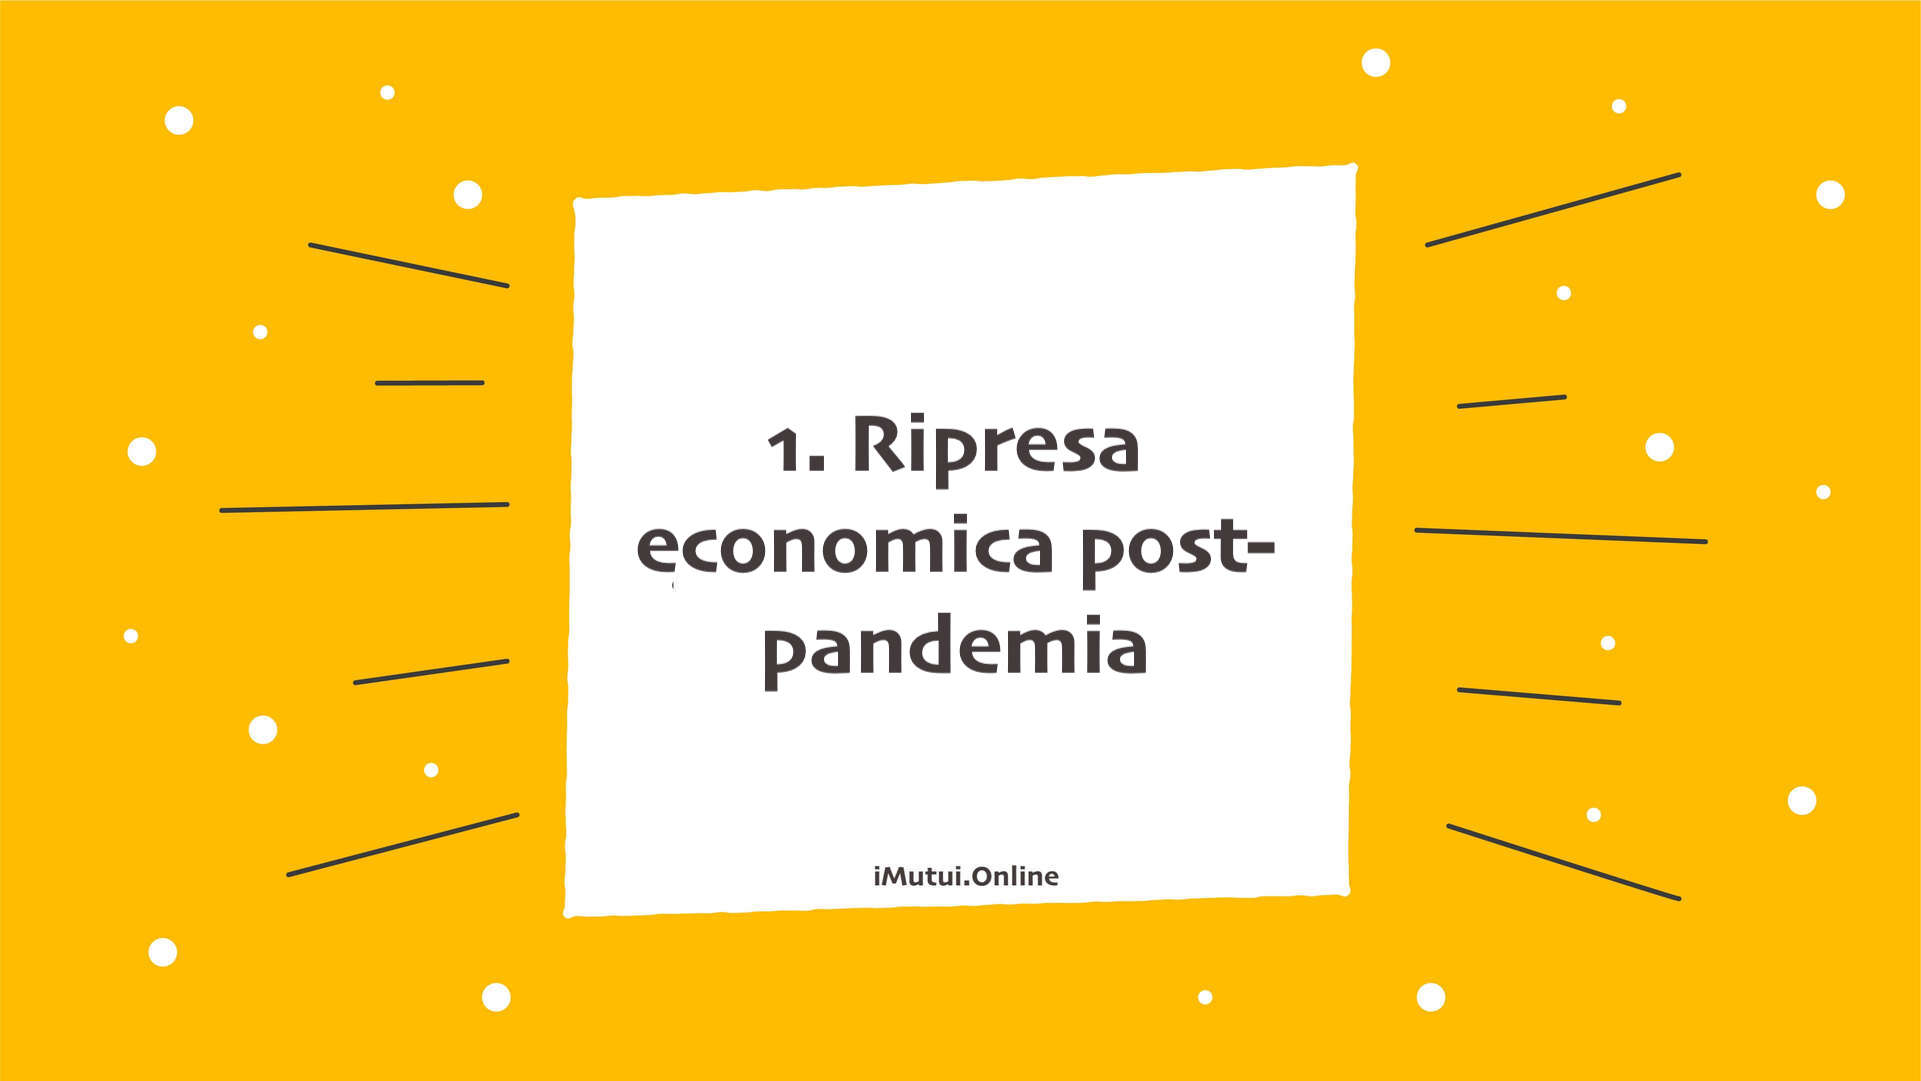 1. Ripresa economica post-pandemia